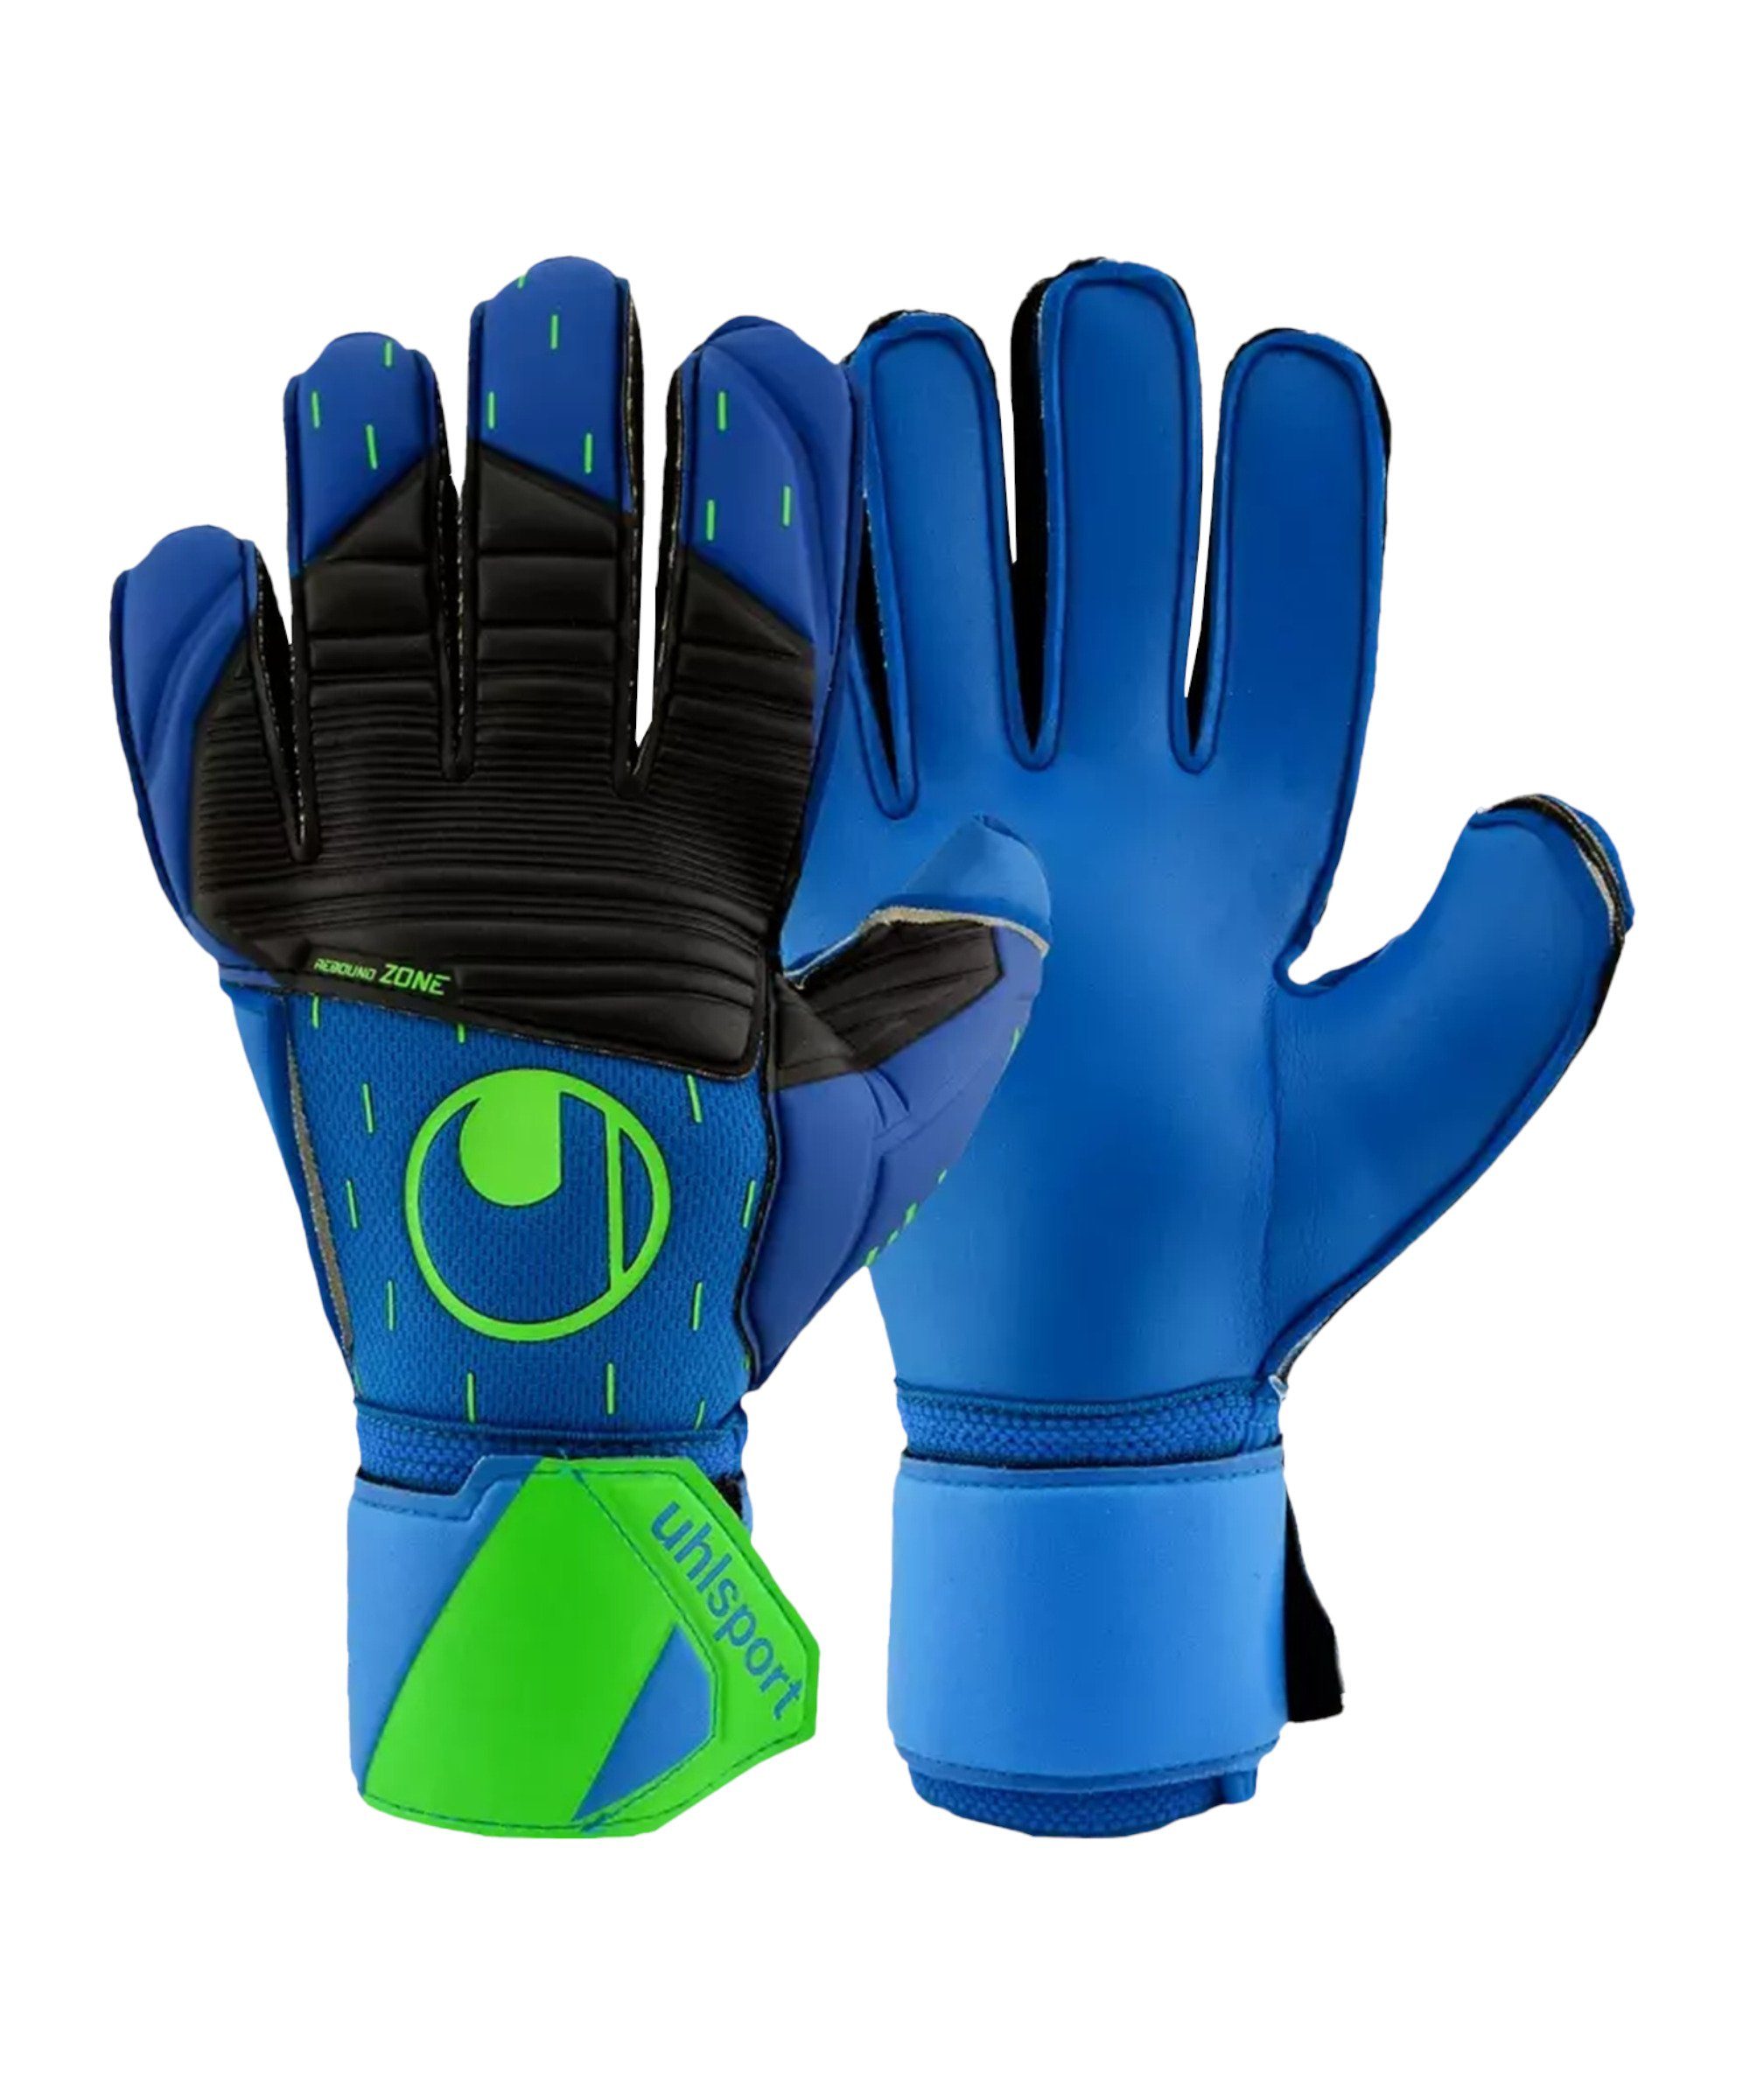 uhlsport Torwarthandschuhe Aquasoft TW-Handschuhe